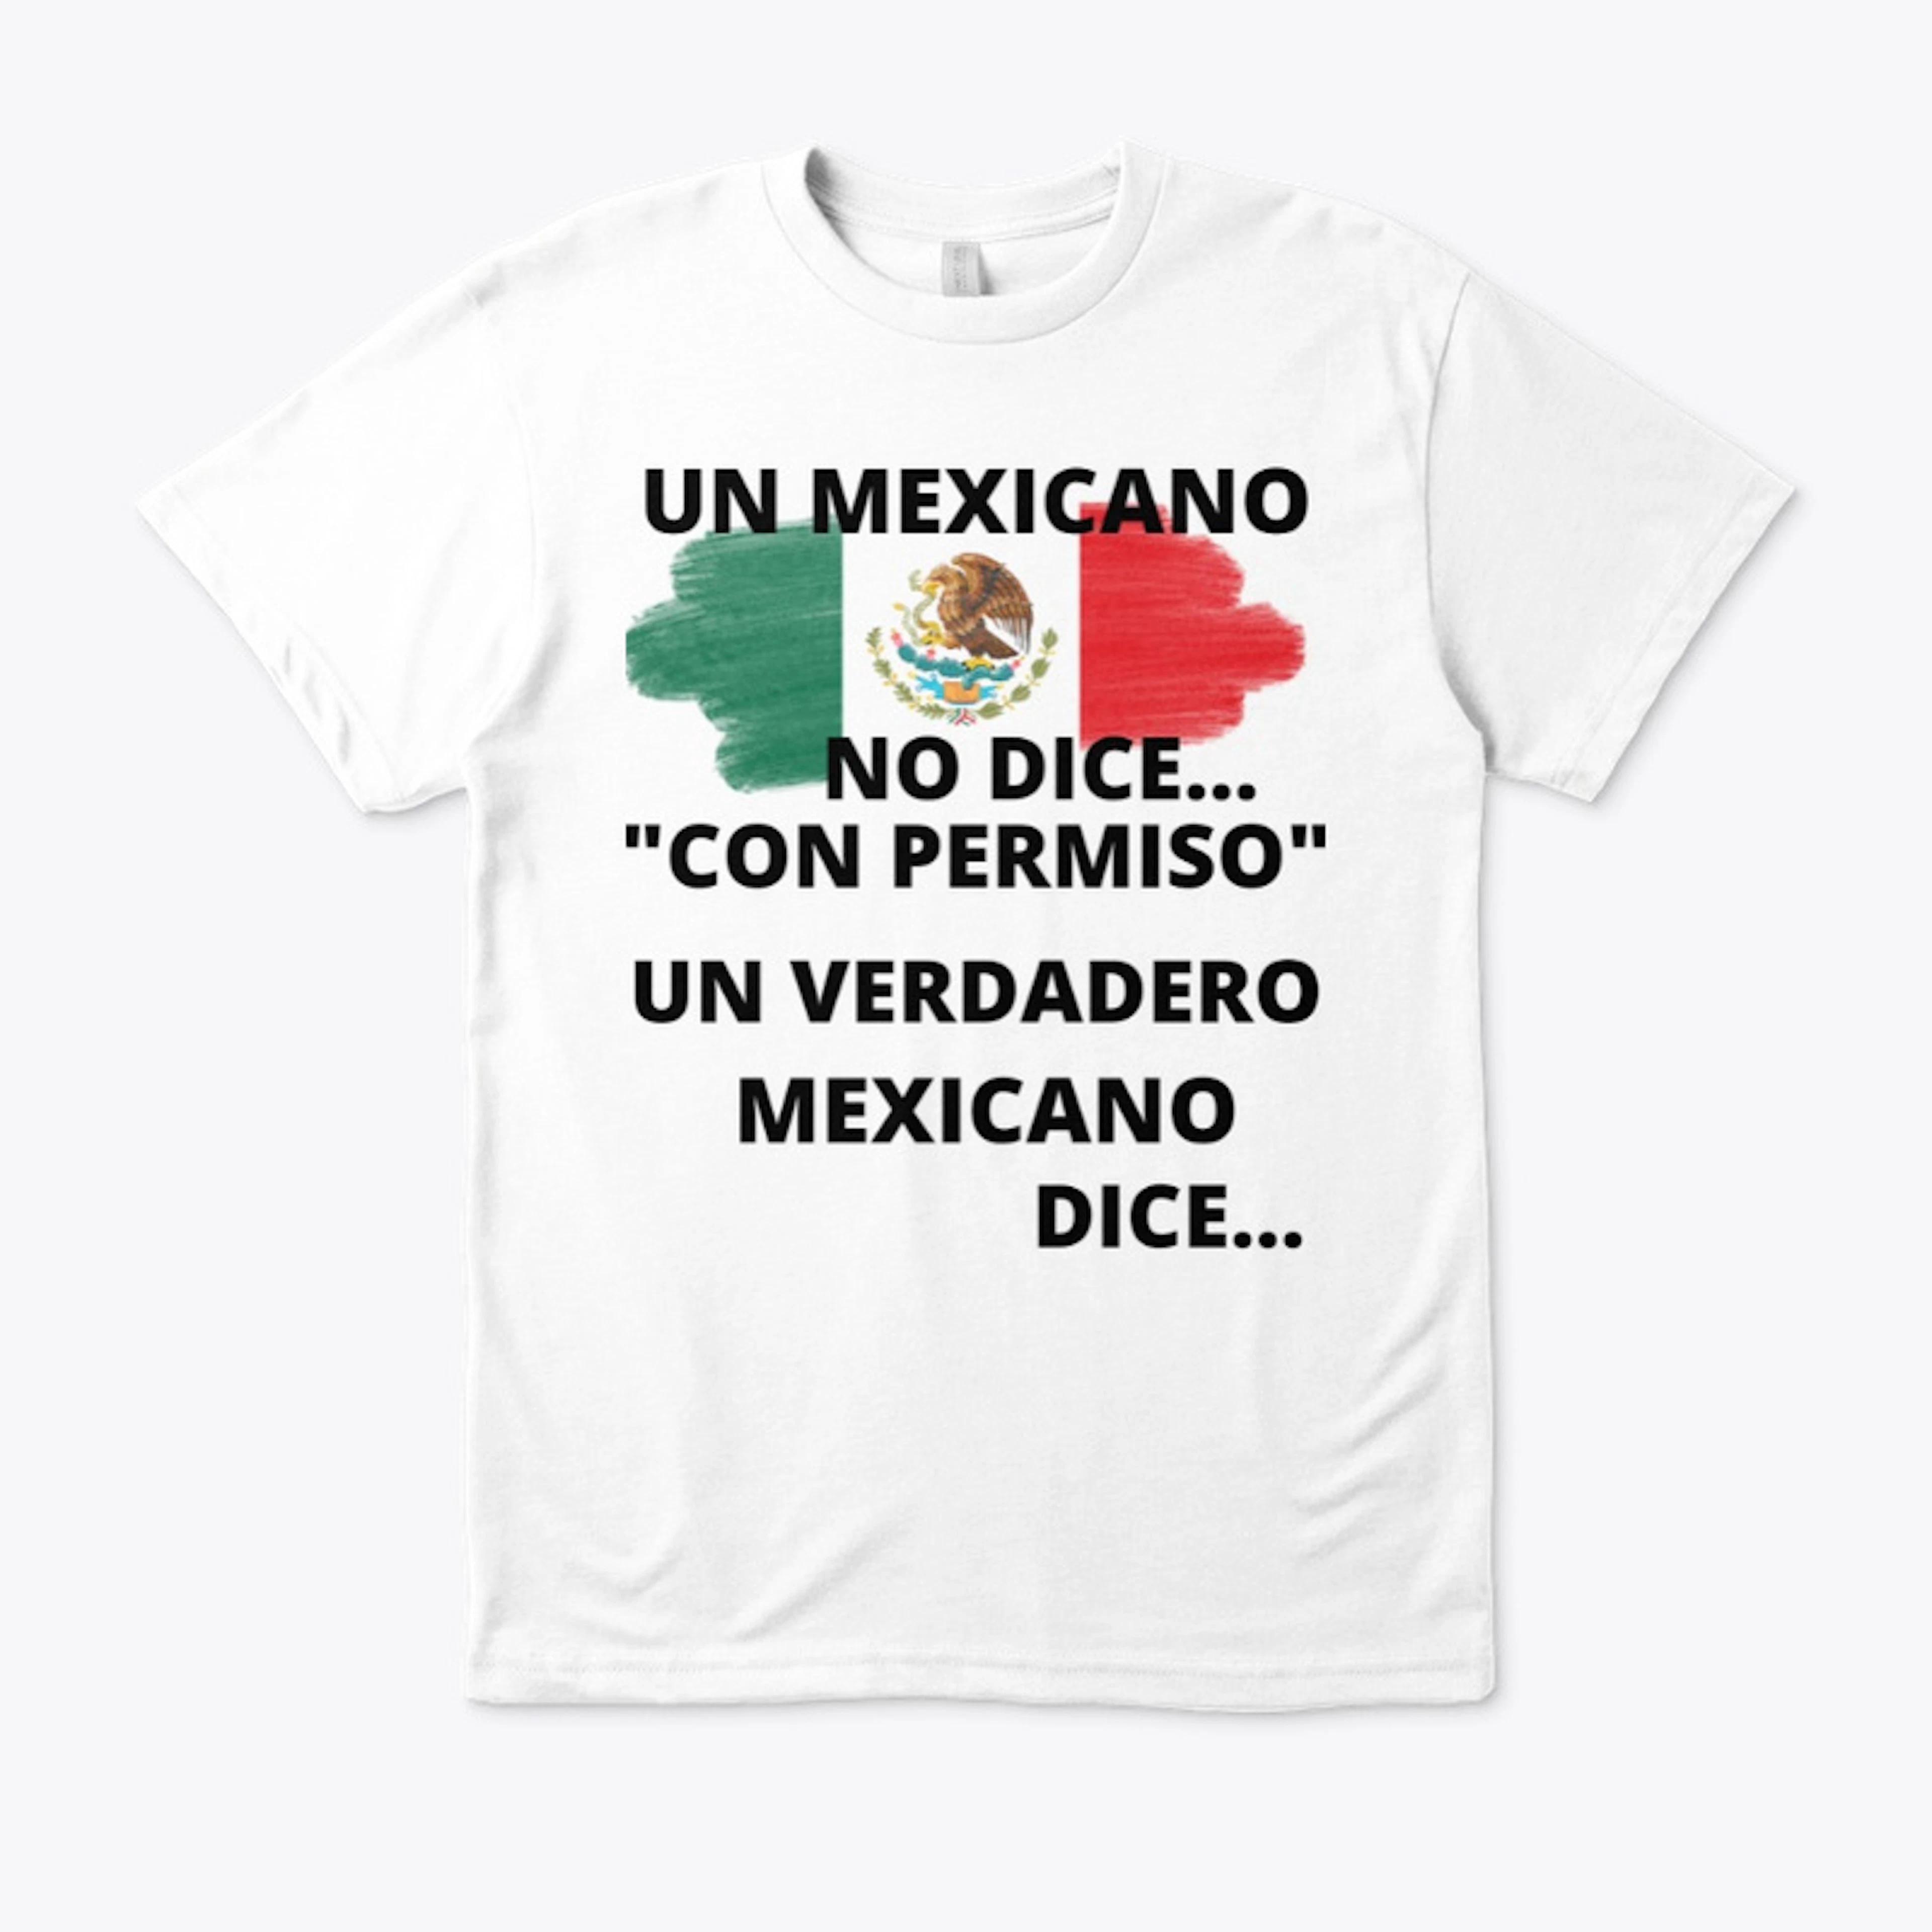 UN VERDADERO MEXICANO DICE...